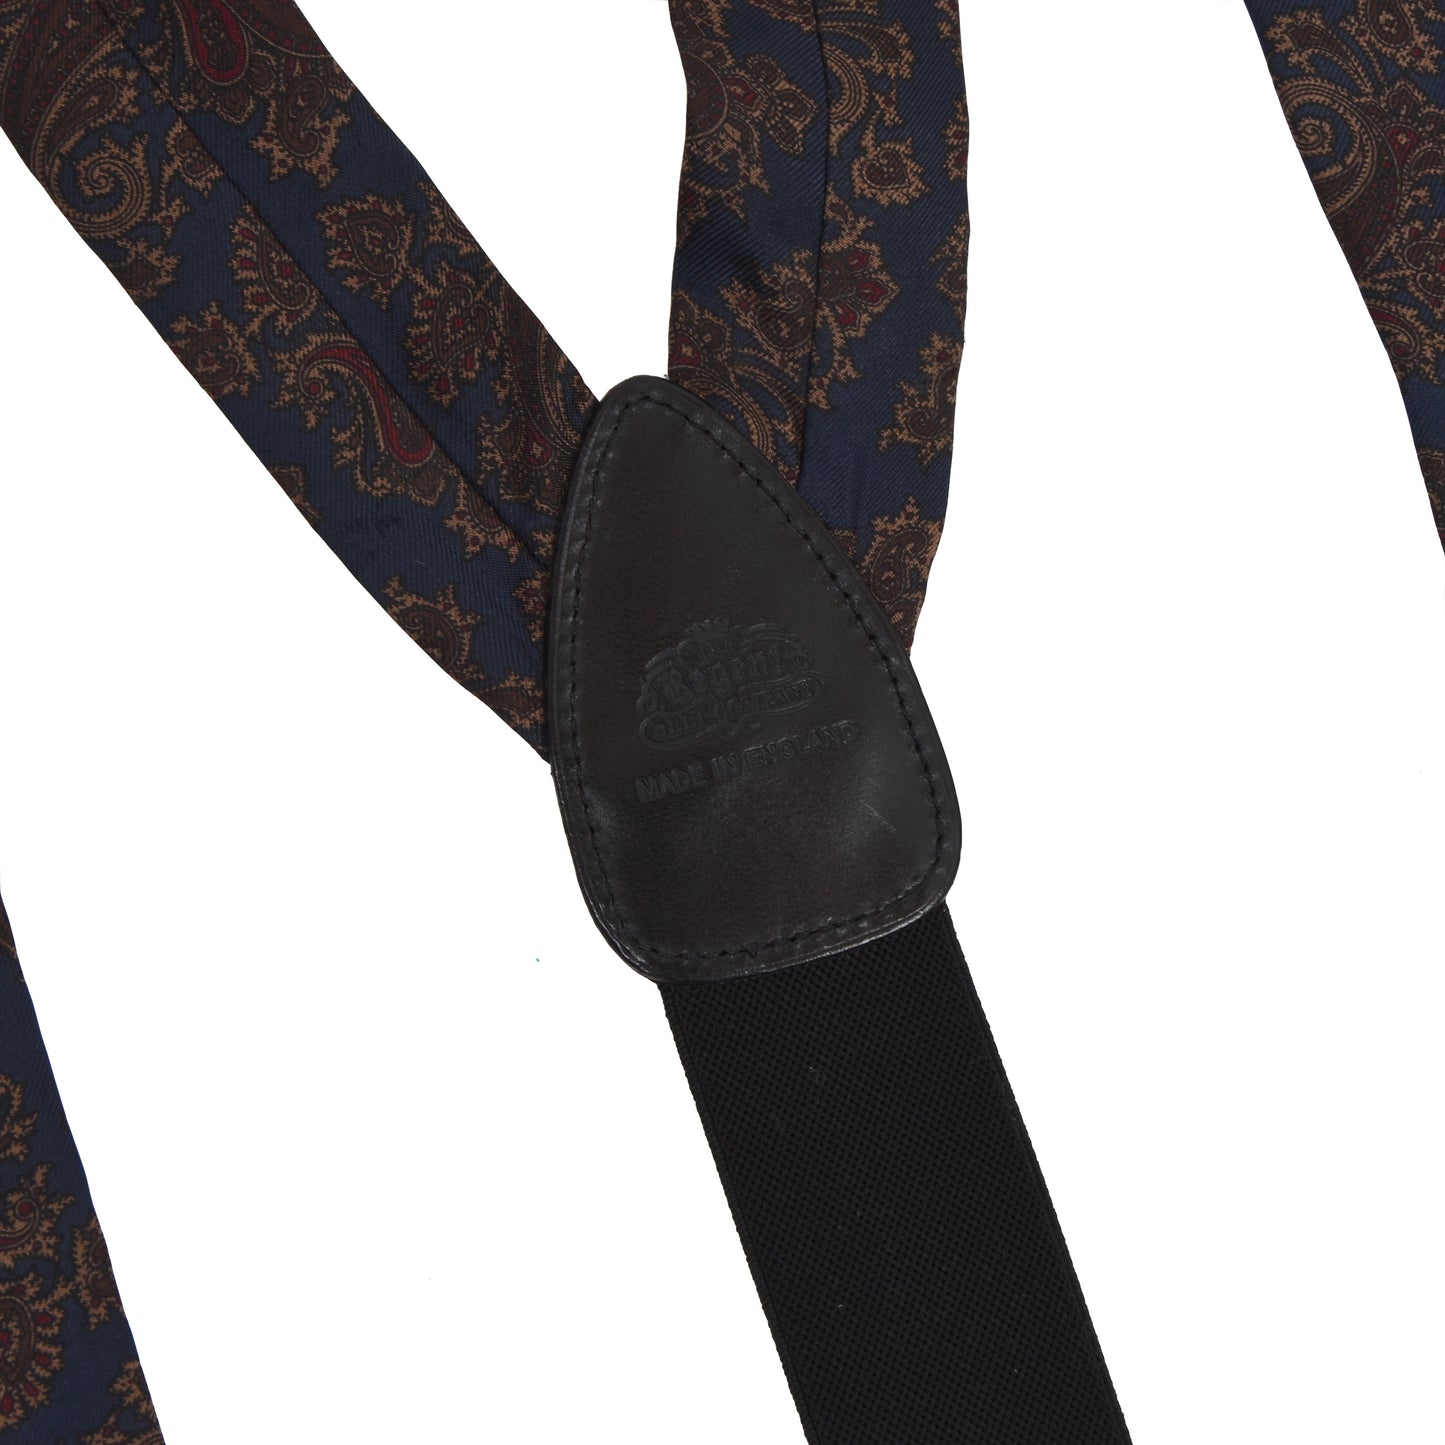 Regent Belt Company Silk Braces/Suspenders - Navy Paisley